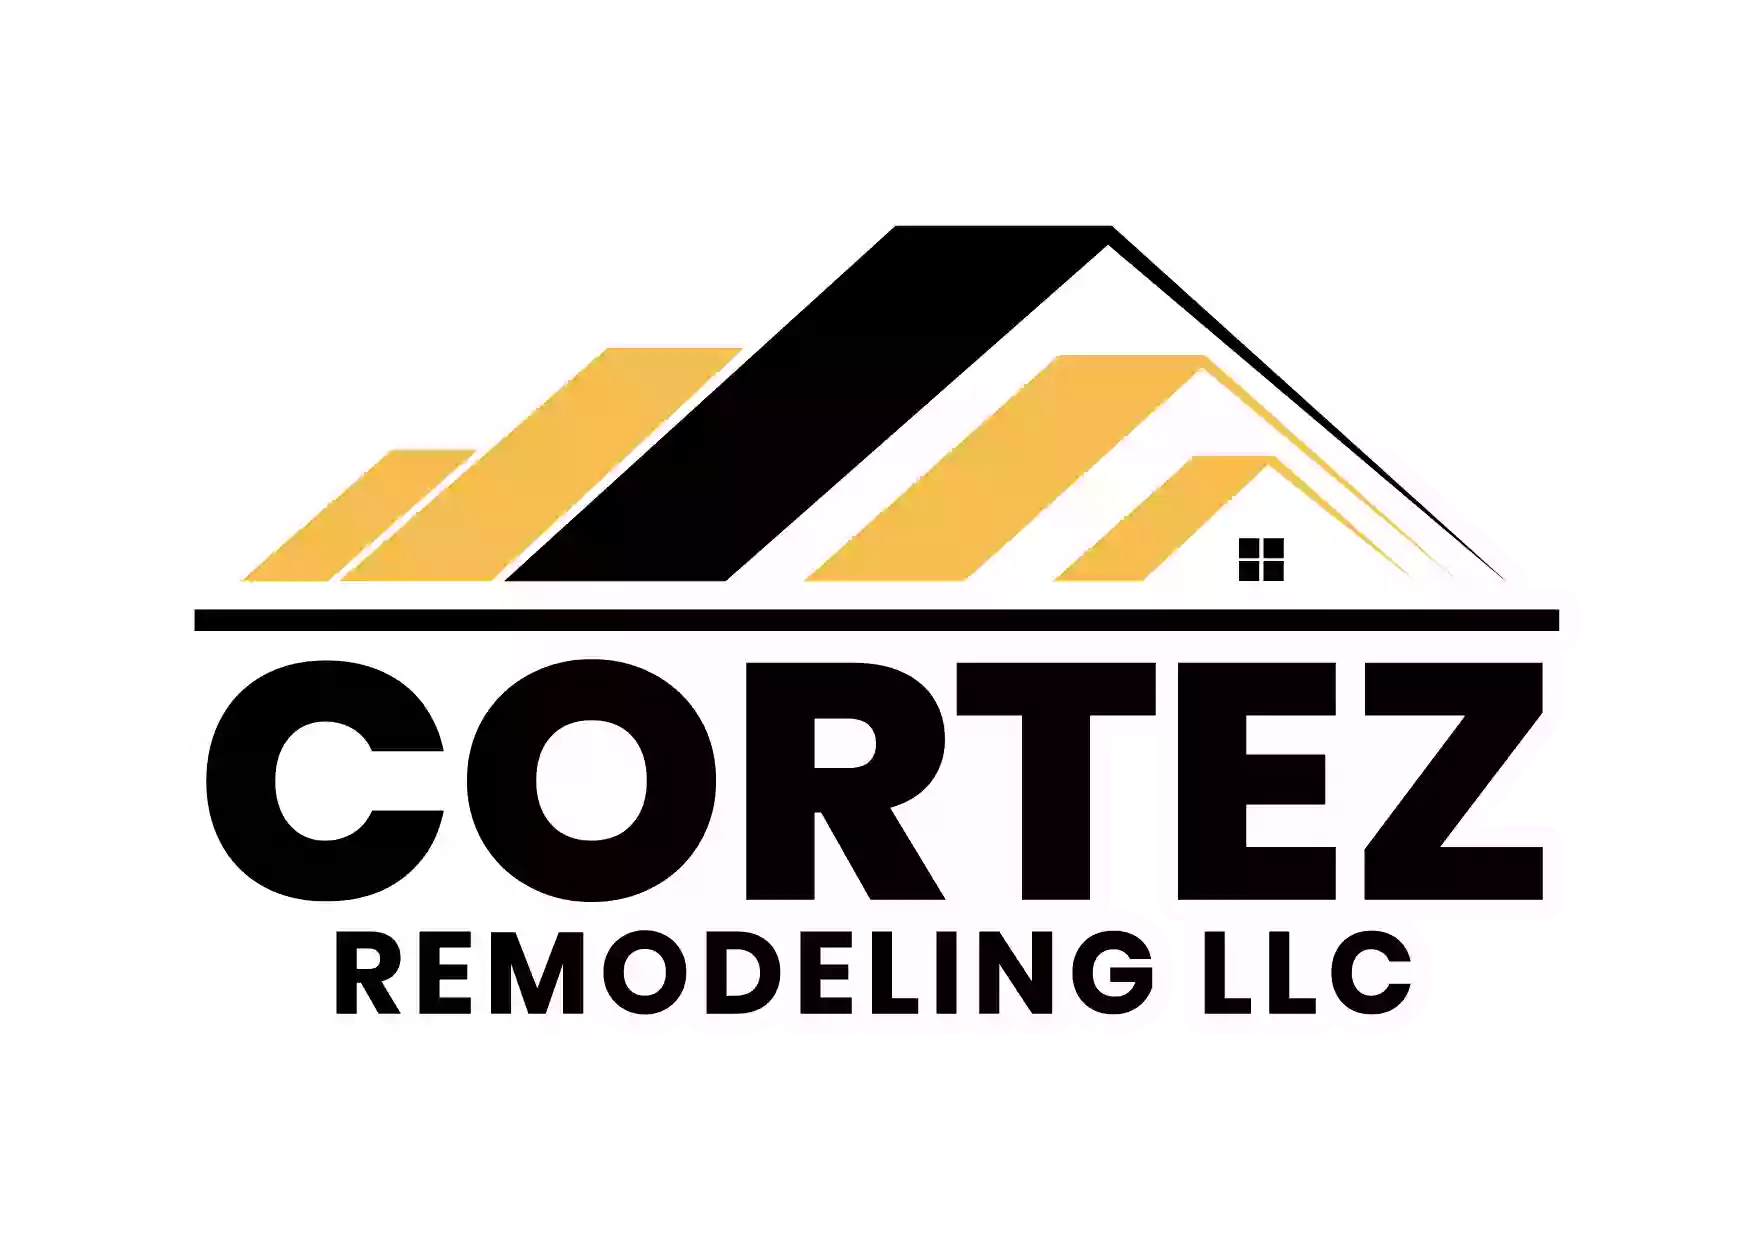 Cortez Remodeling LLC